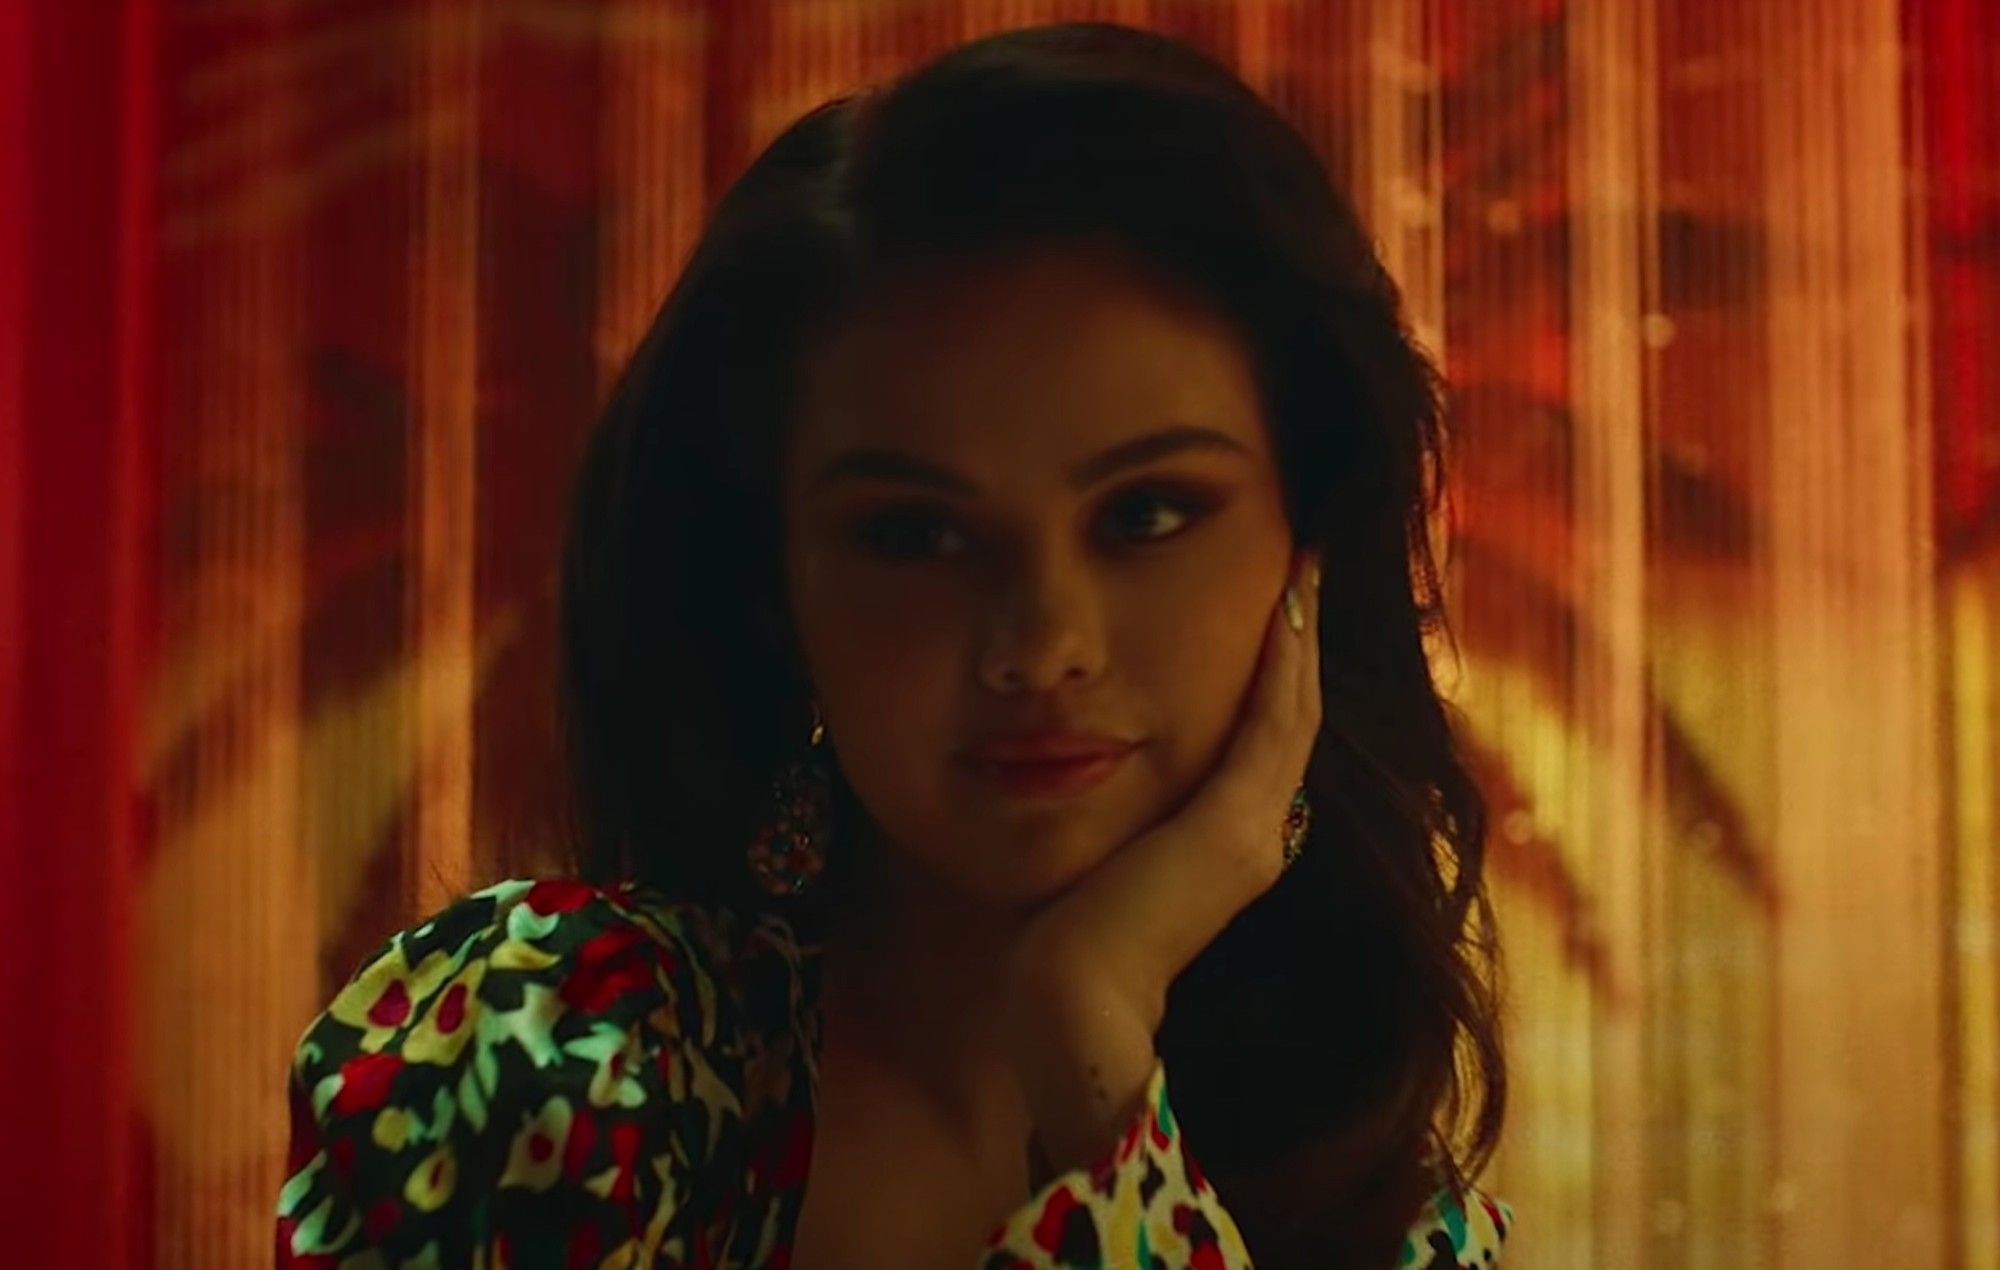 Selena Gomez and DJ Snake team up on new bilingual single 'Selfish Love'